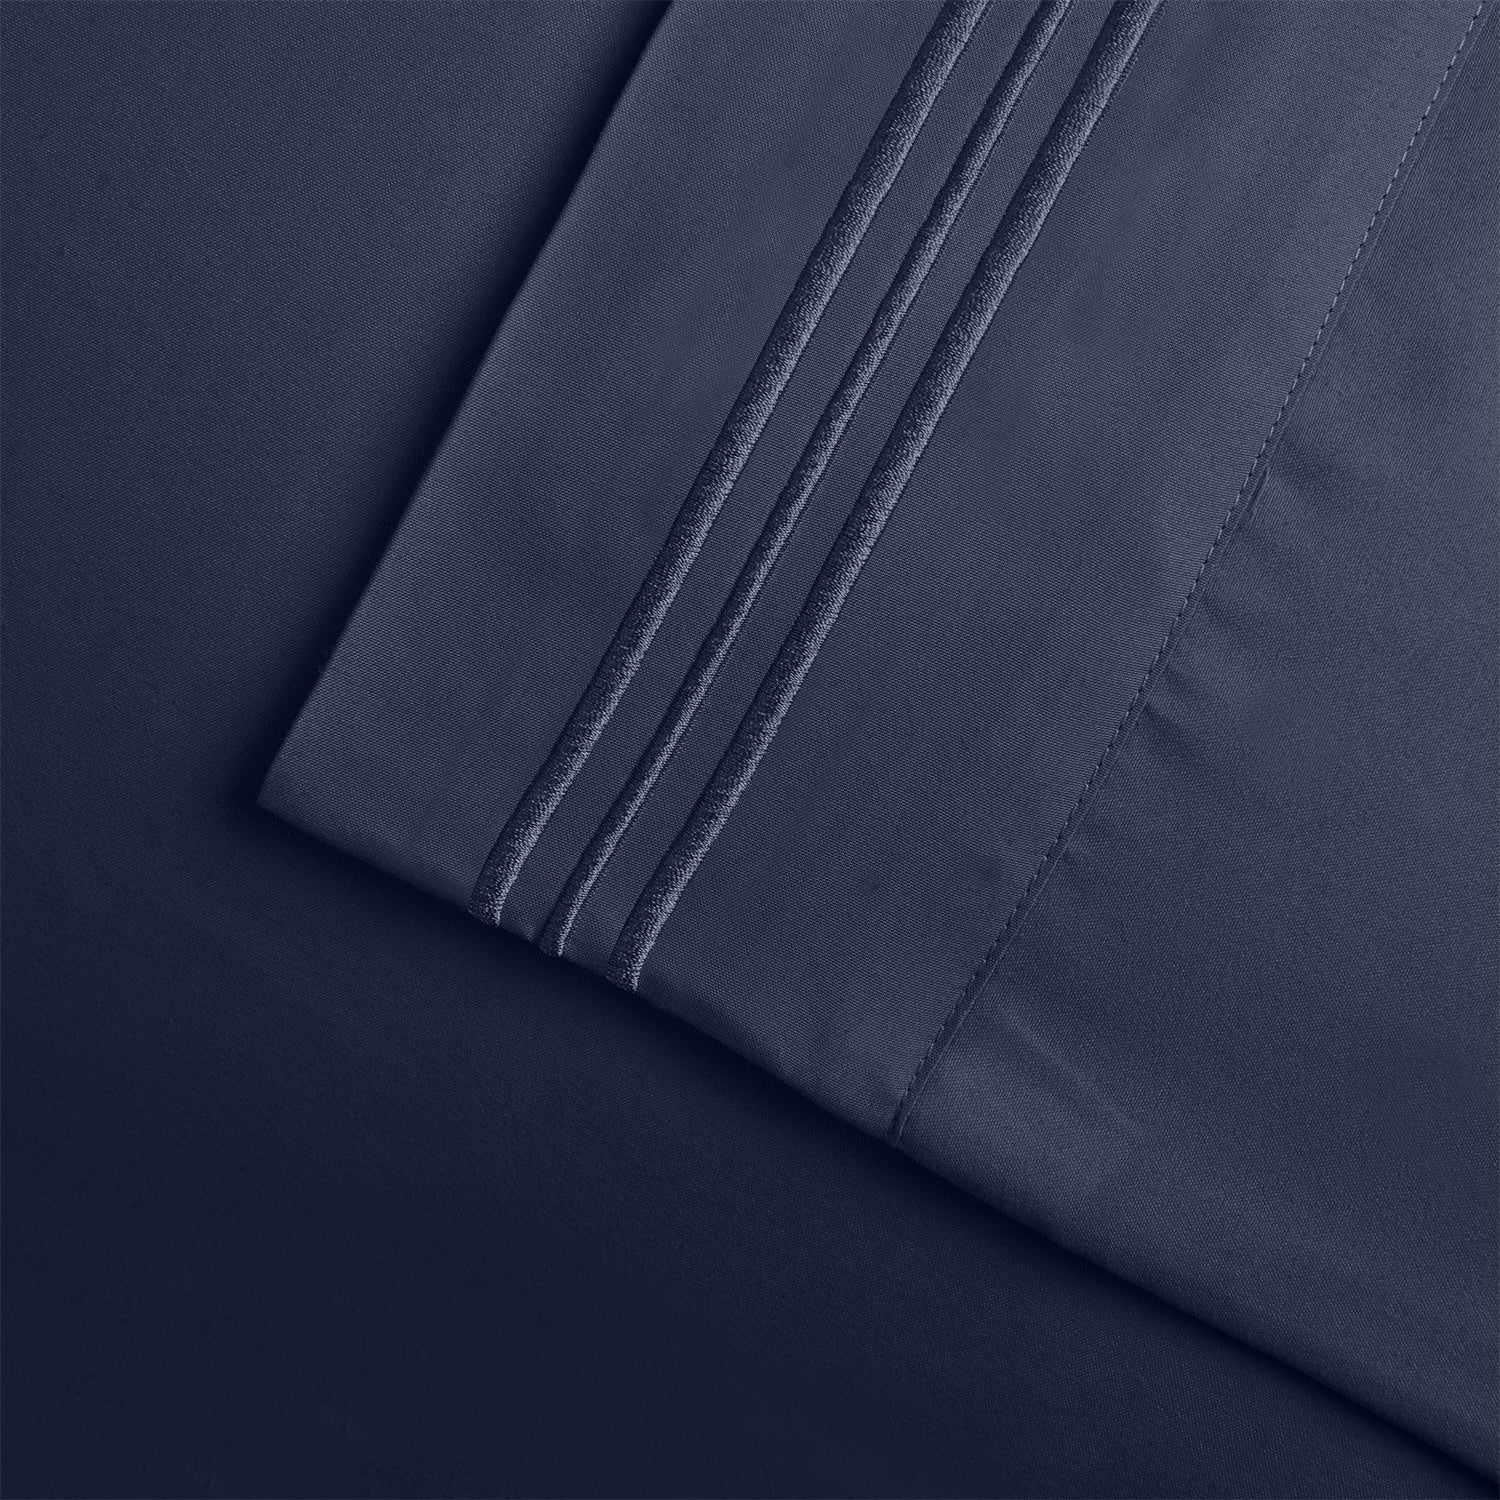  Superior 3000 Series Wrinkle Resistant 3 Line Embroidery Microfiber Deep Pocket Sheet Set - Navy Blue